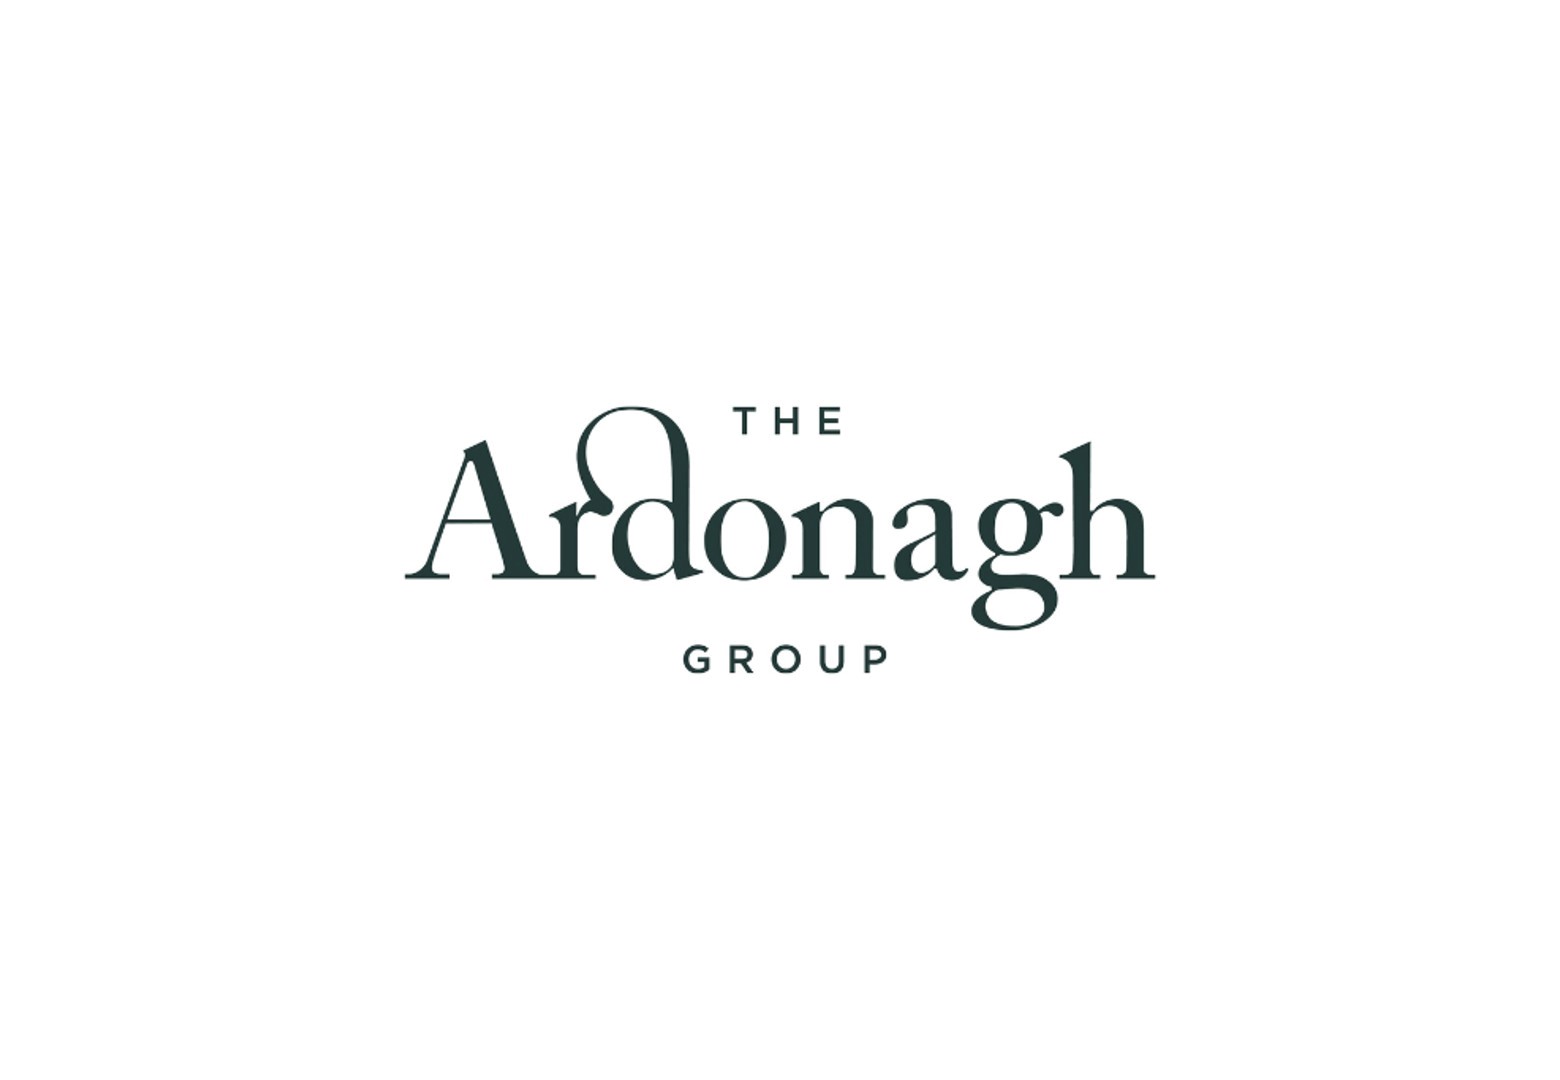 Ardonagh Group logo.